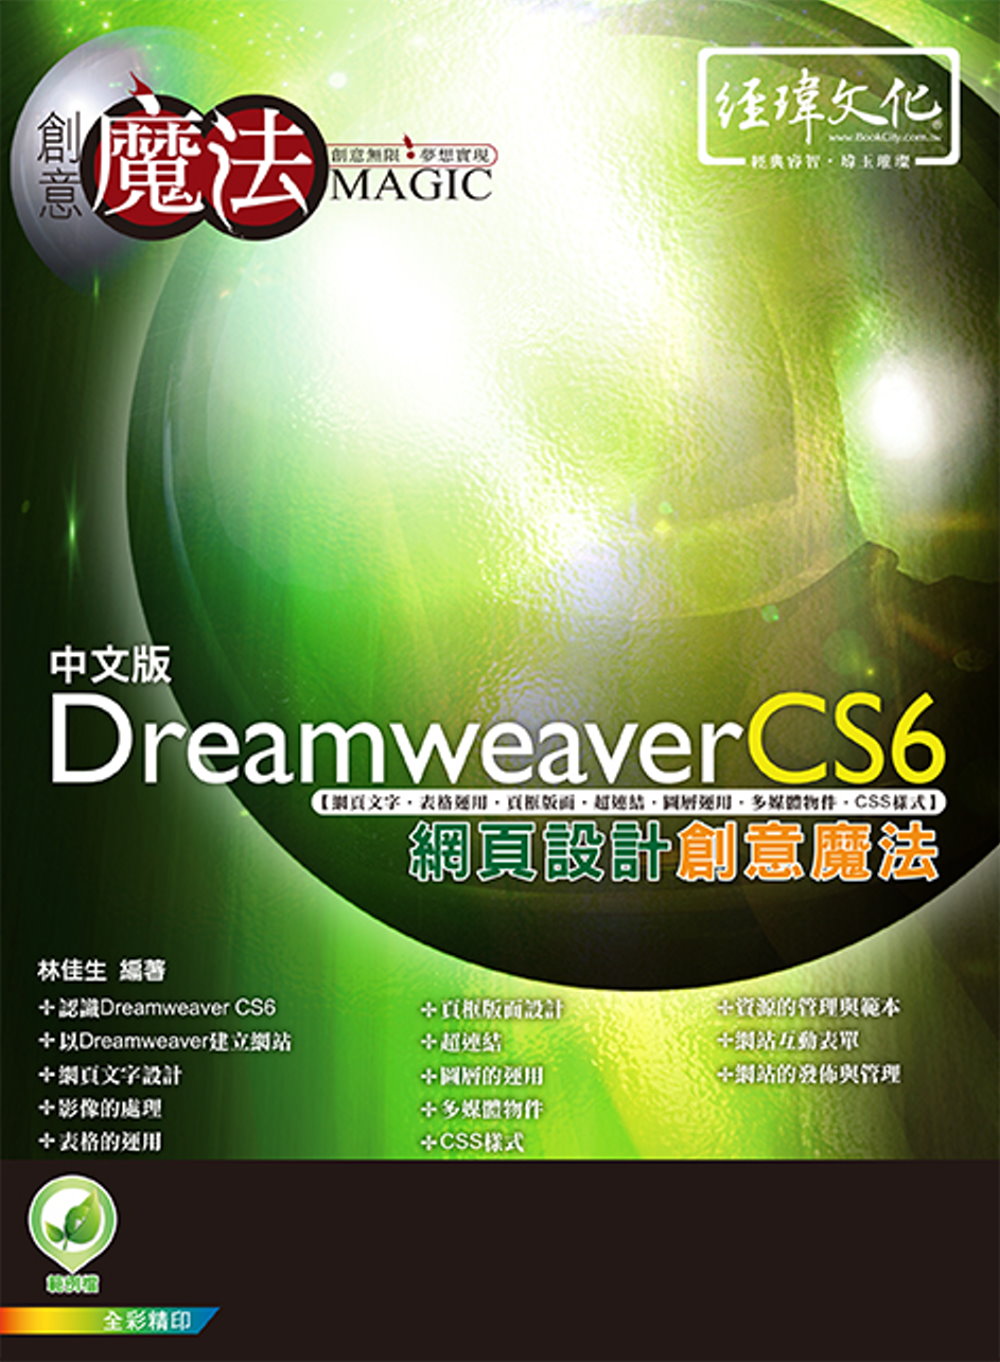 Dreamweaver CS6 網頁設計創意魔法(附綠色範例...